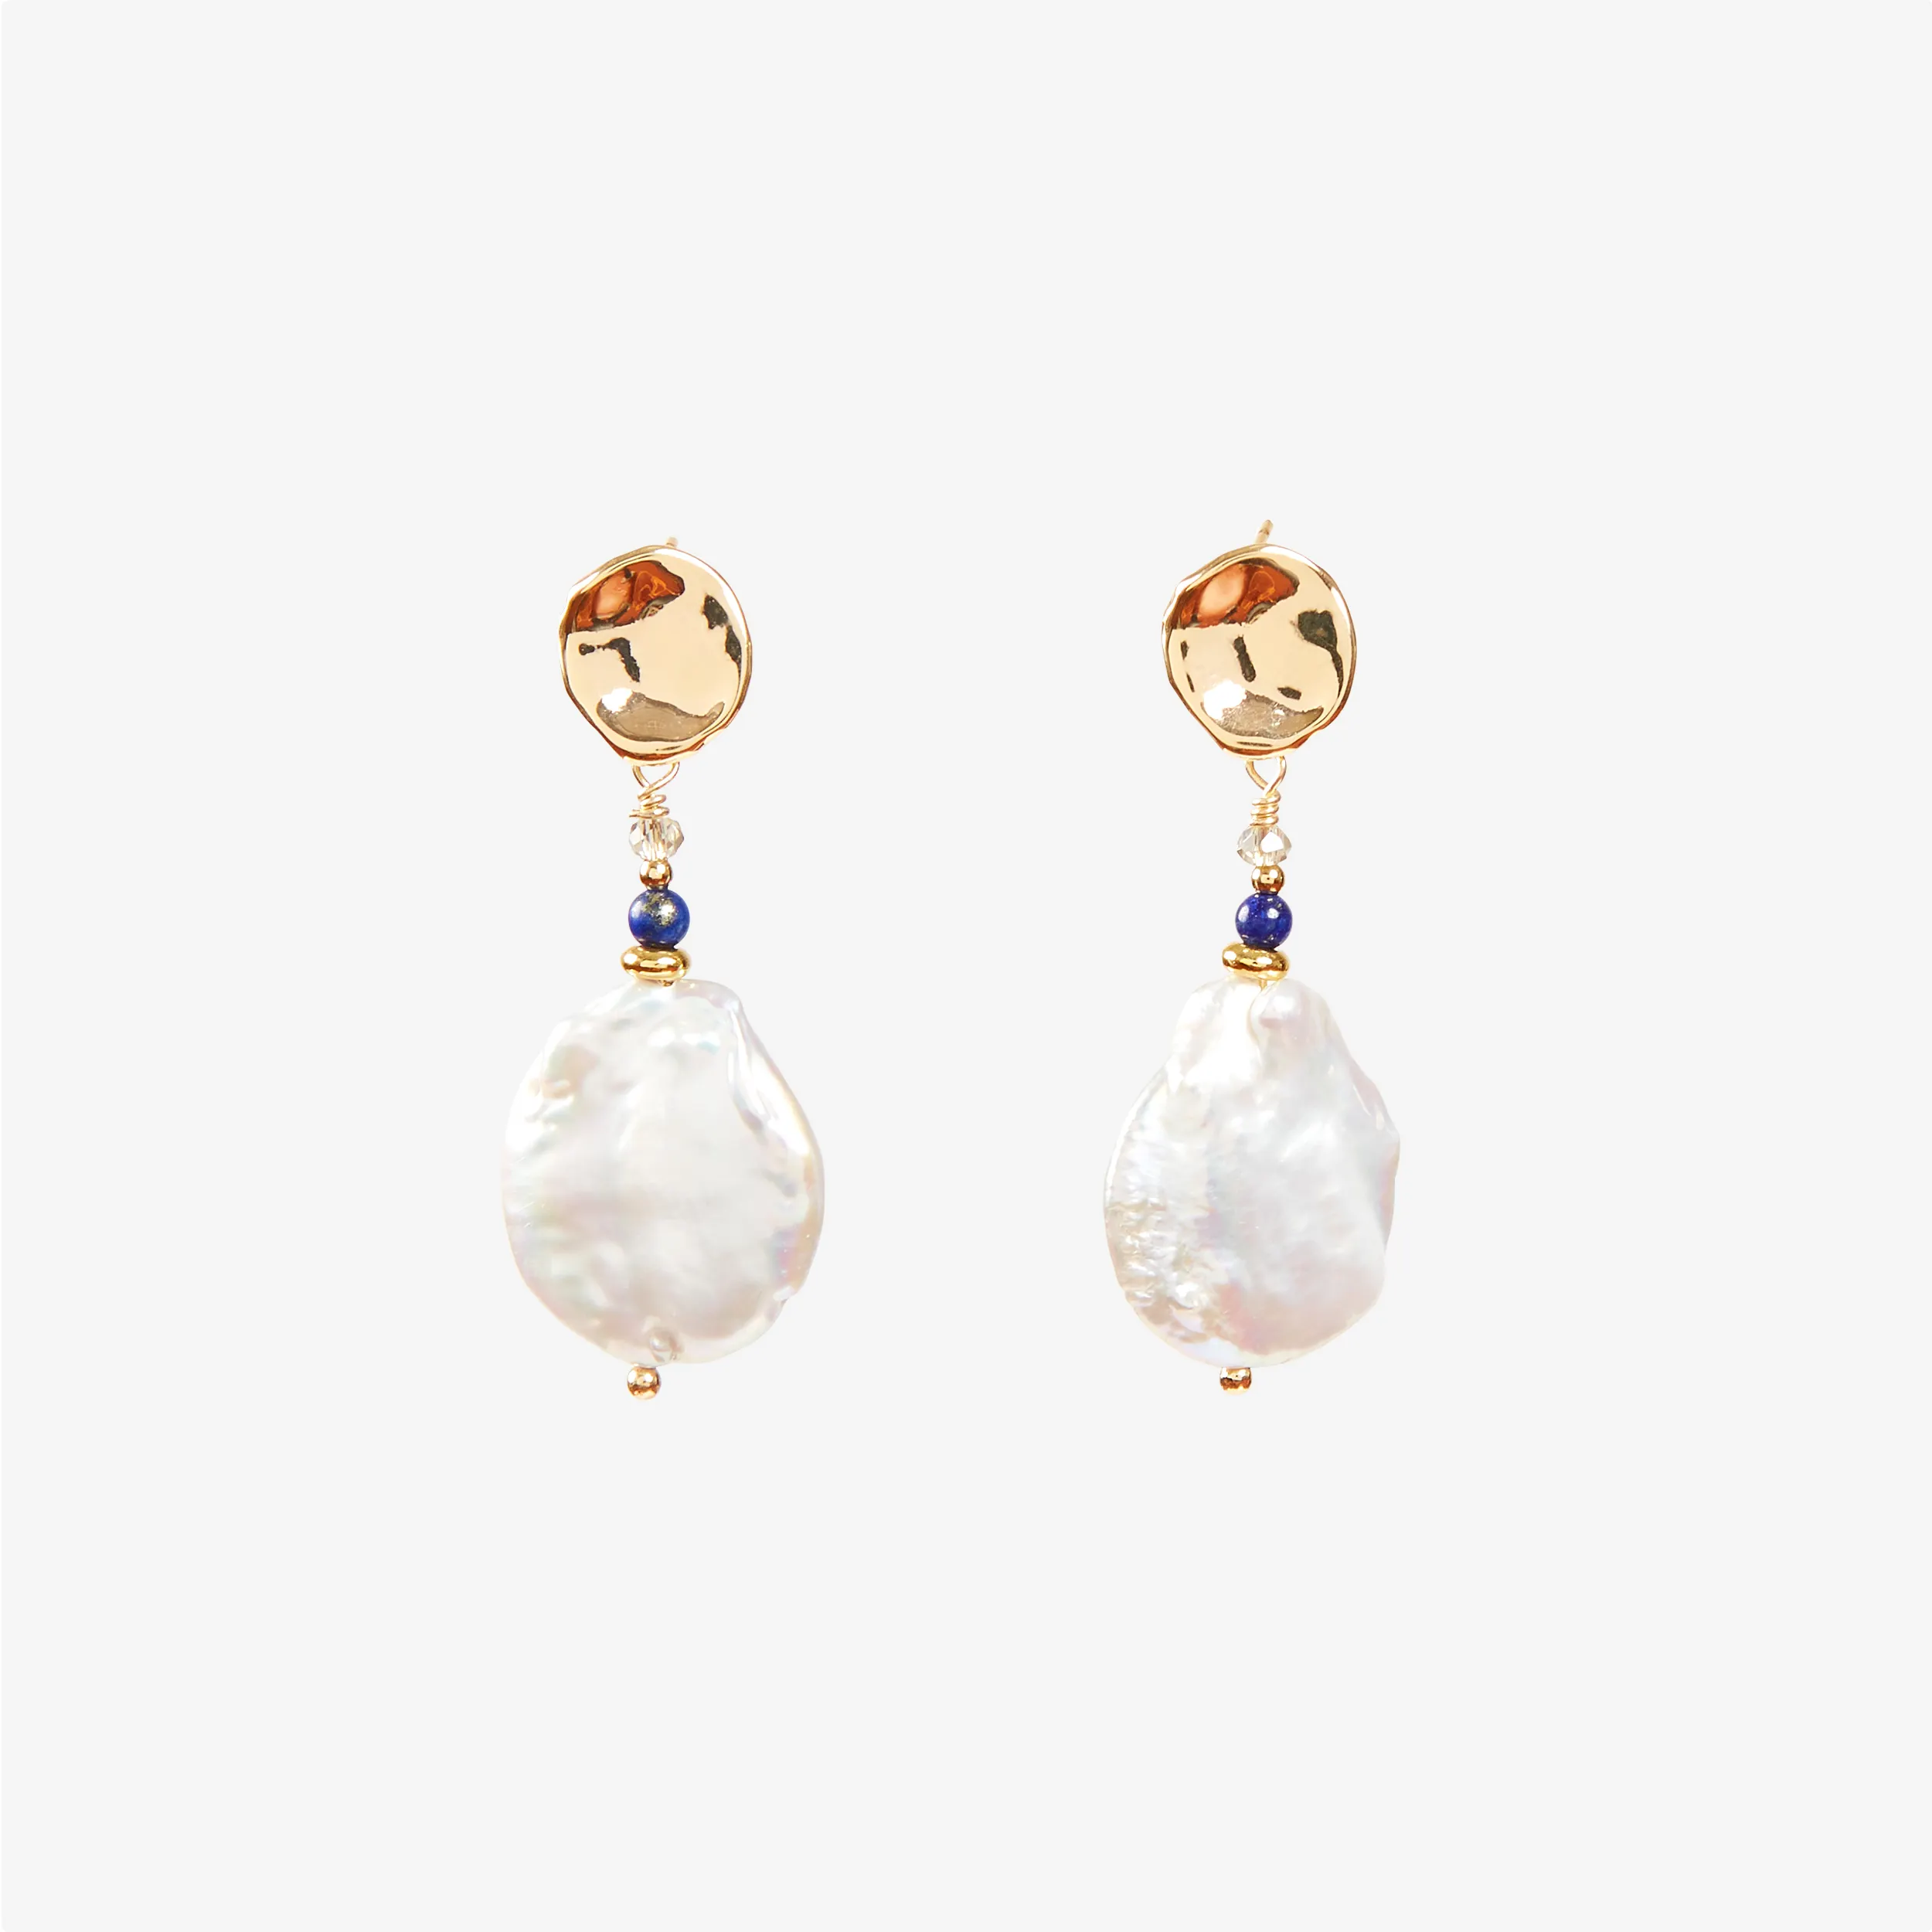 Ww Original Design Natural Baroque Pearl Fashion Glamour Earrings